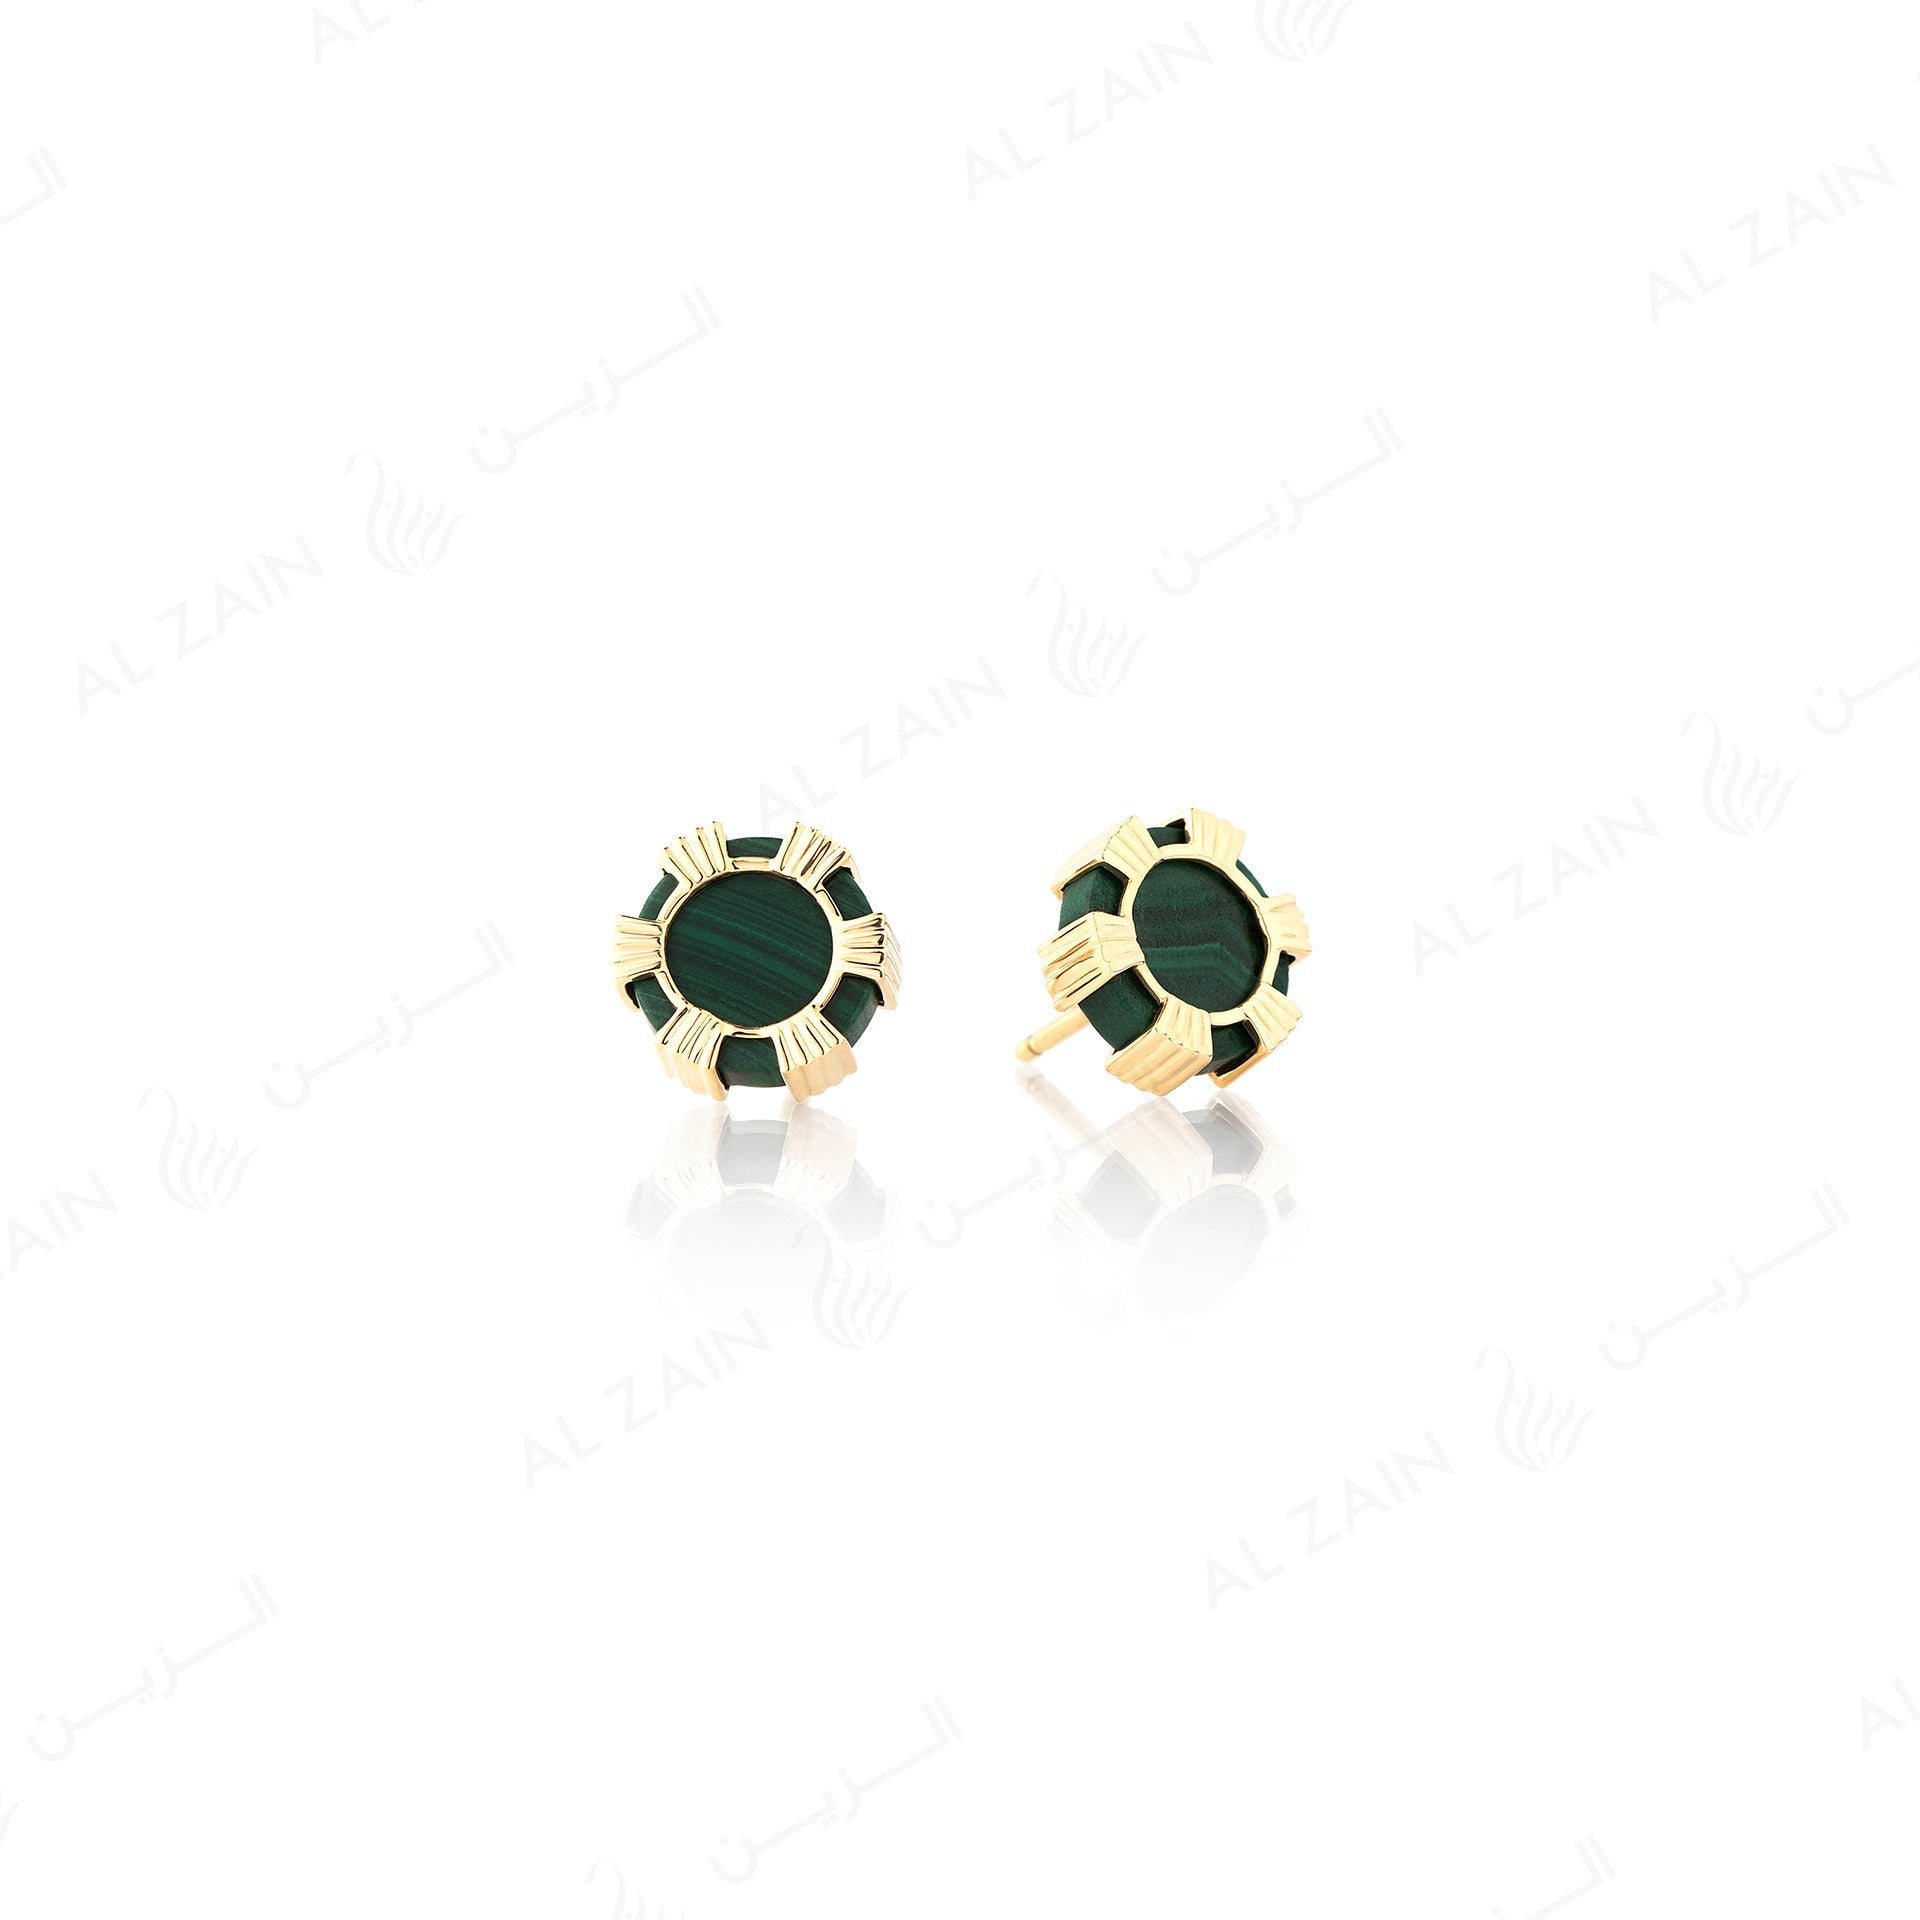 Cordoba earrings in yellow gold with malachite stones